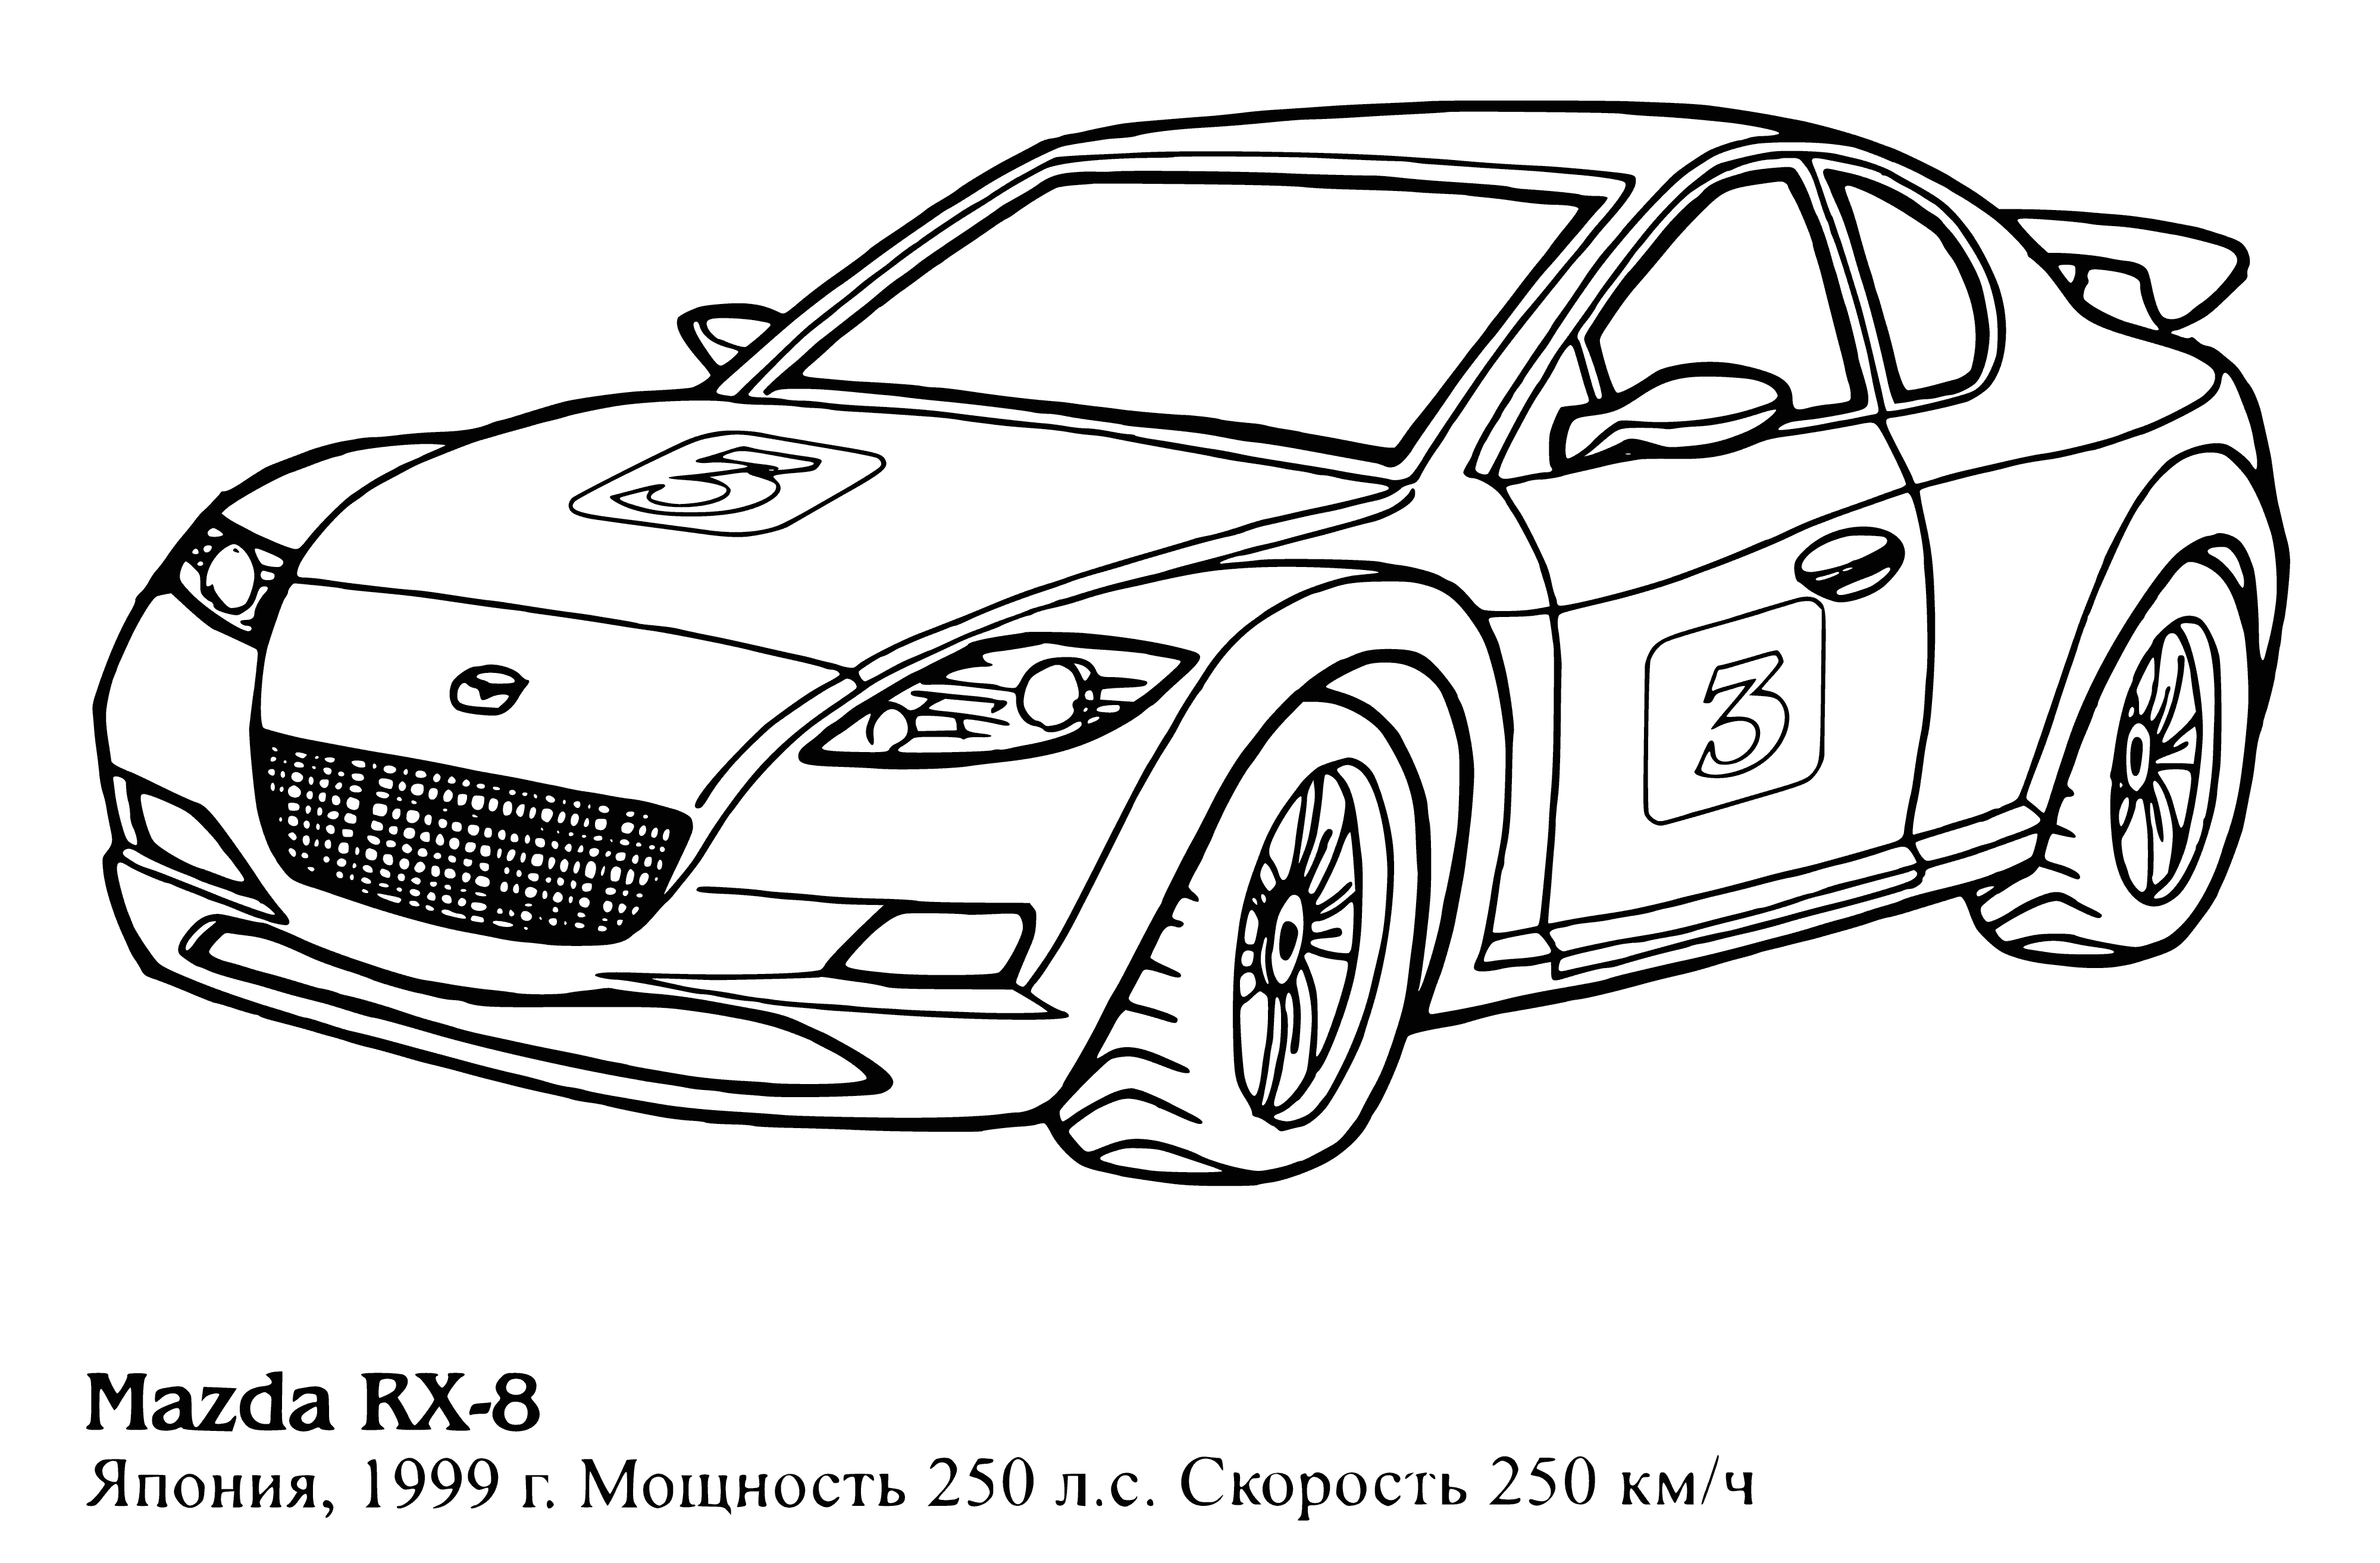 Mazda RX-8 kolorowanka